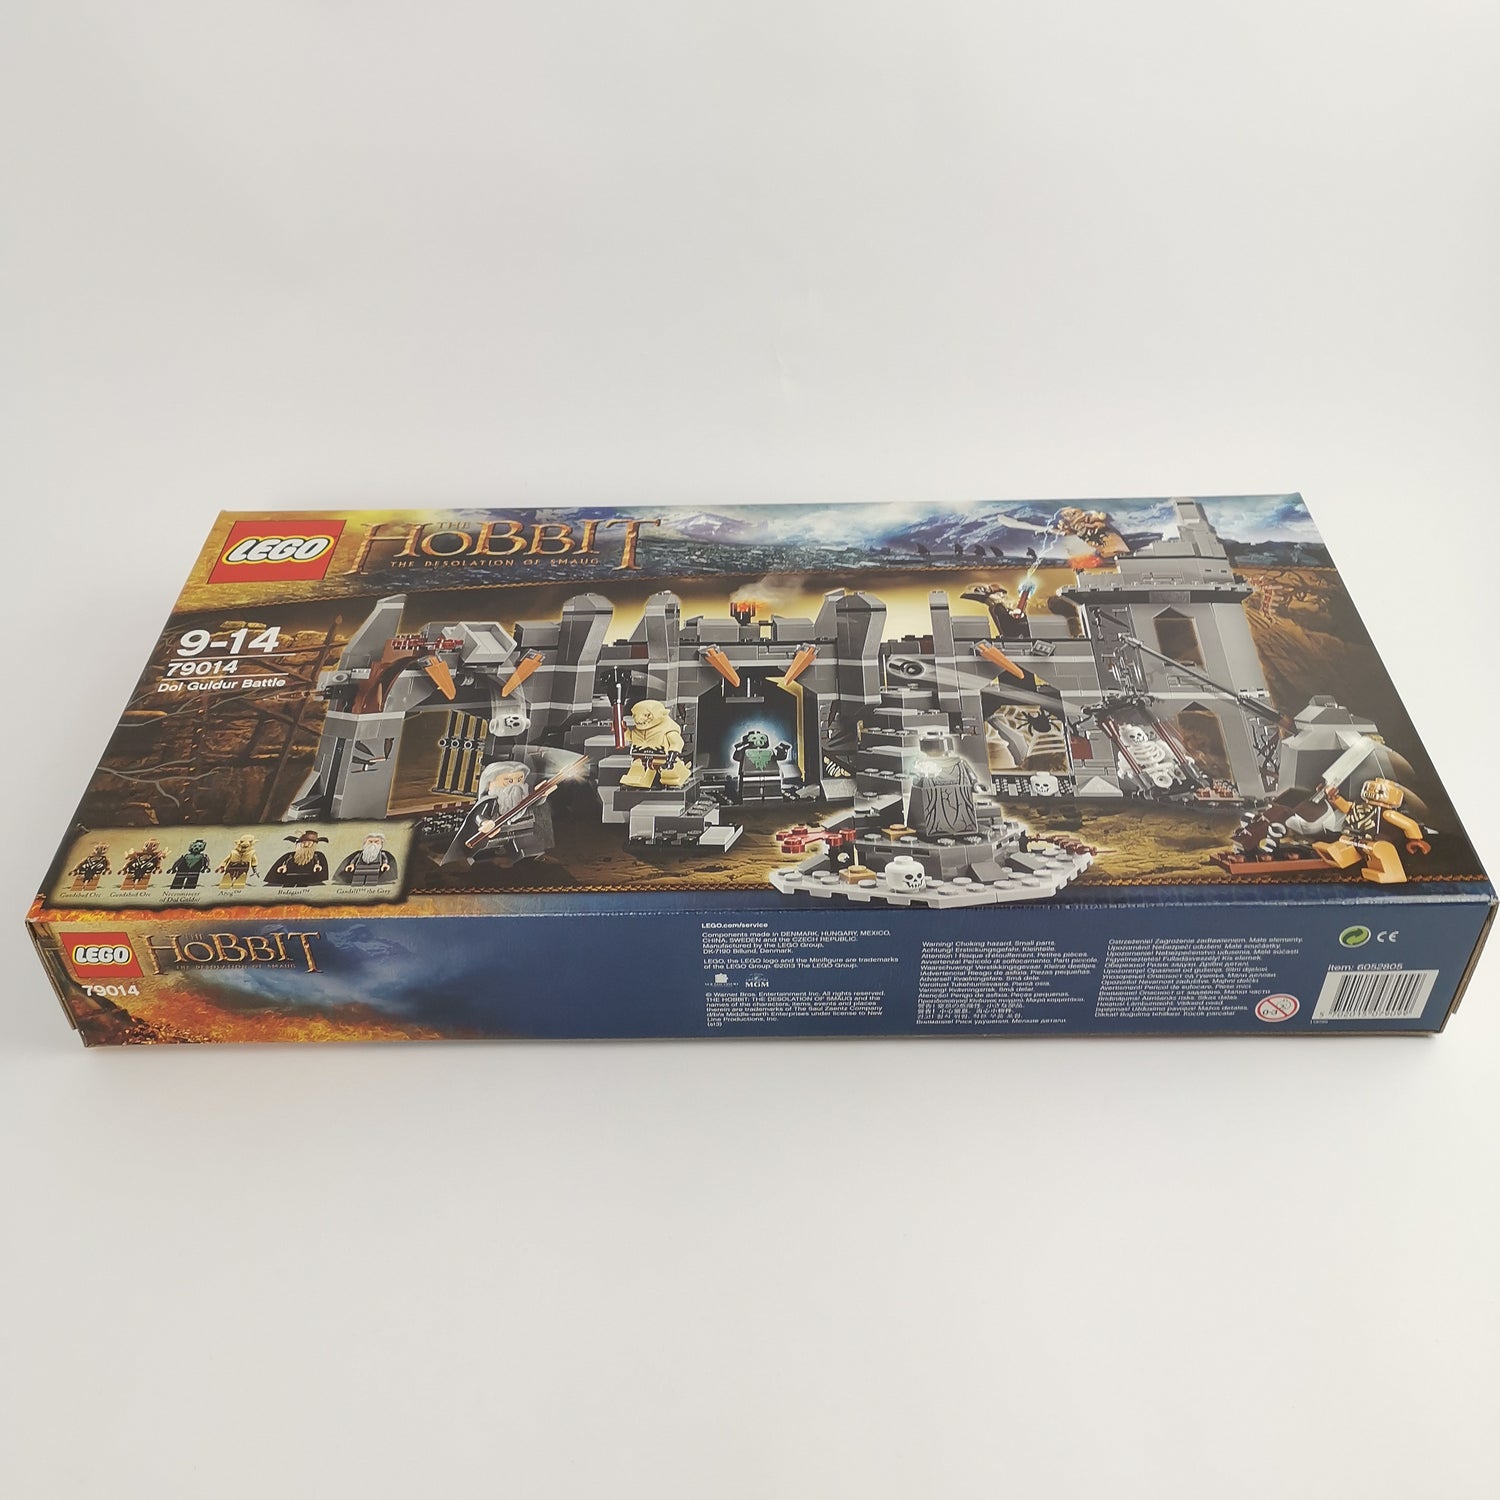 Lego Set 79014 Dol Guldur Battle (9-14 Jahre) The Hobbit The Desolation of Smaug